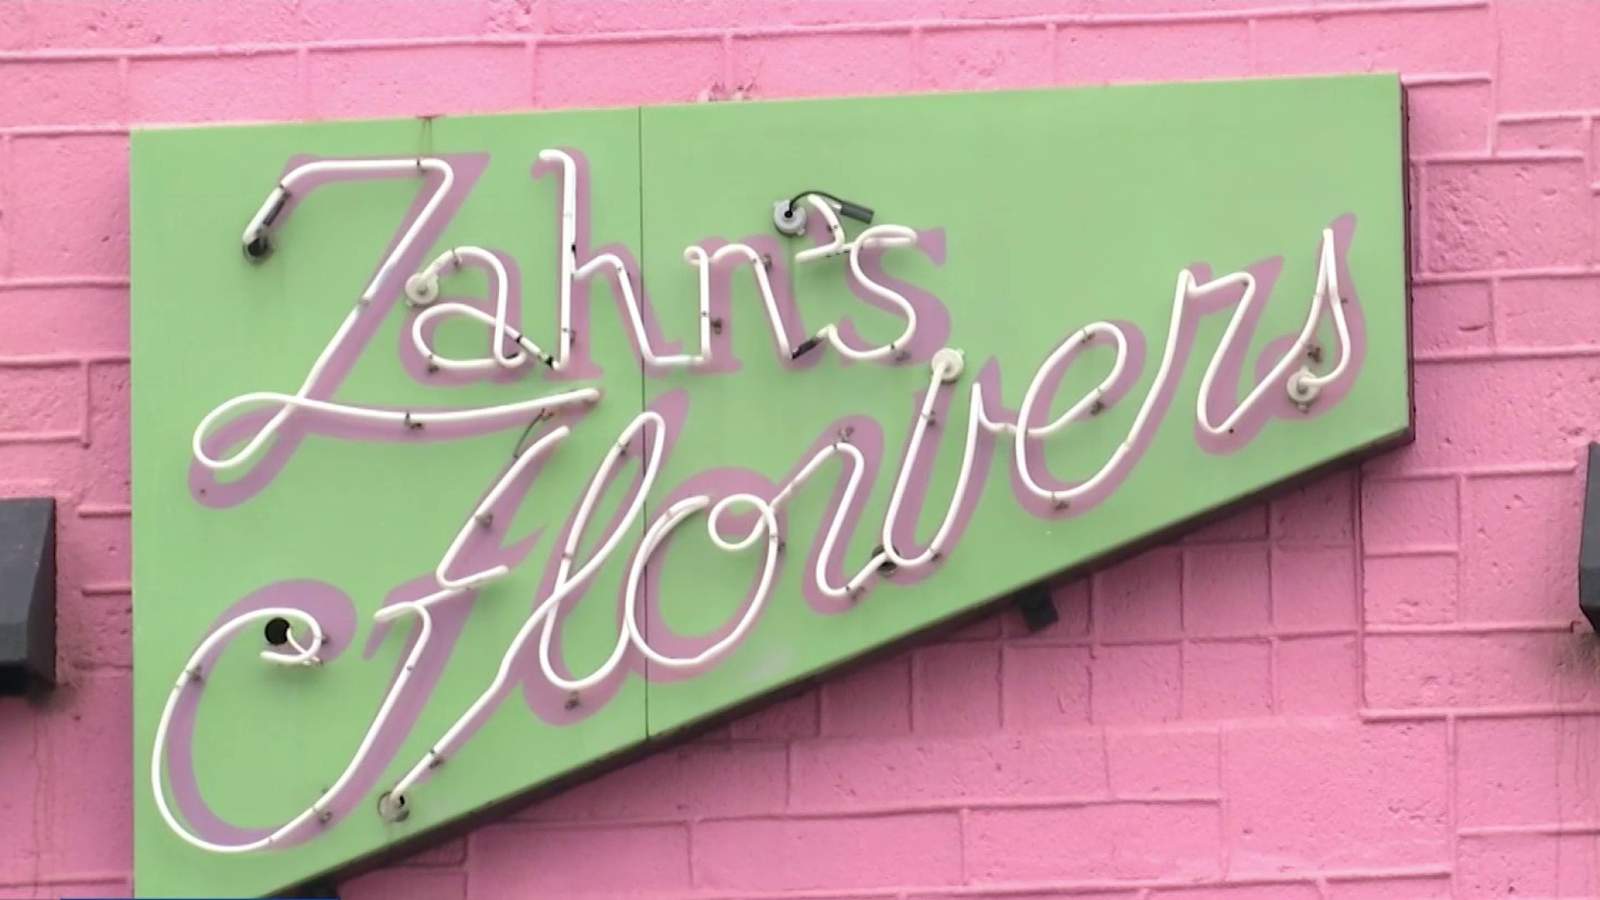 Historic Daytona Beach flower shop suffers extensive damage after electrical fire